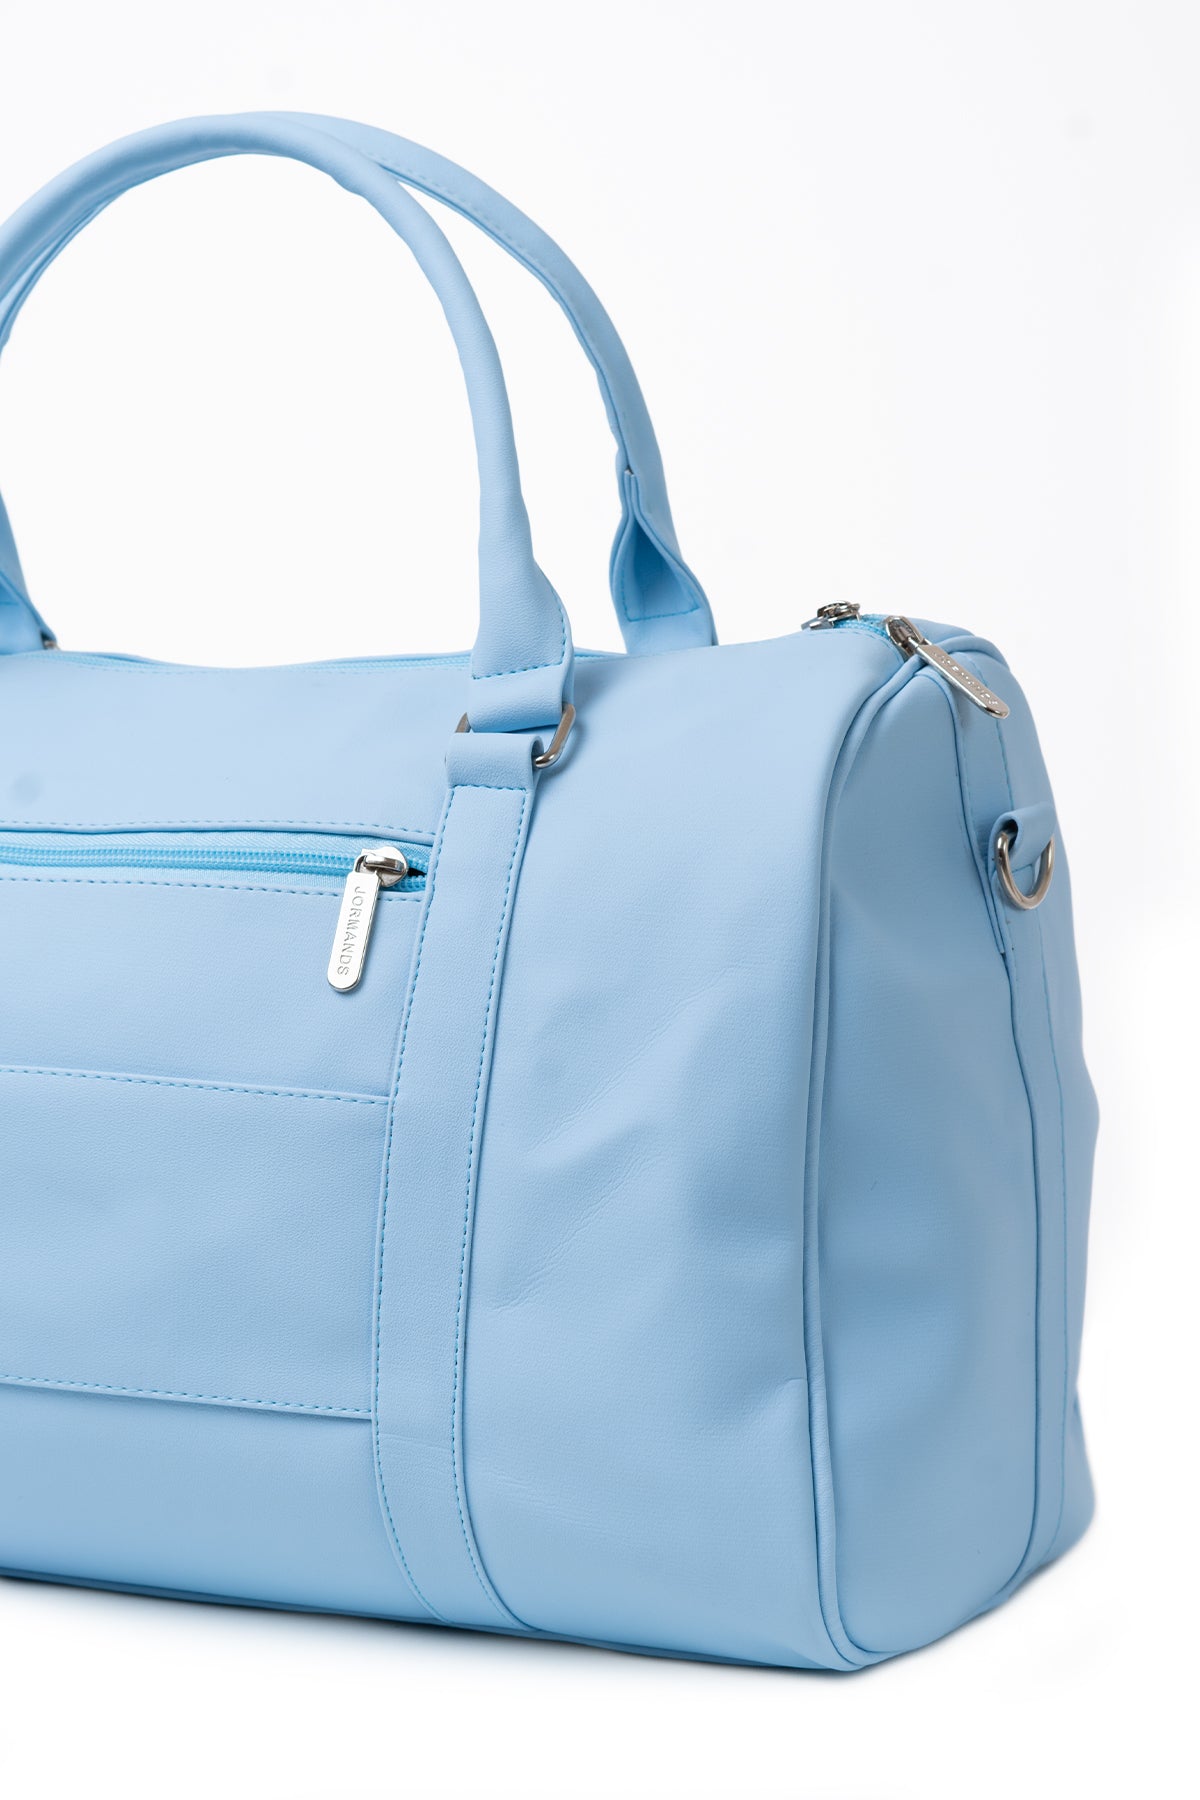 Baby Blue Duffel Bag